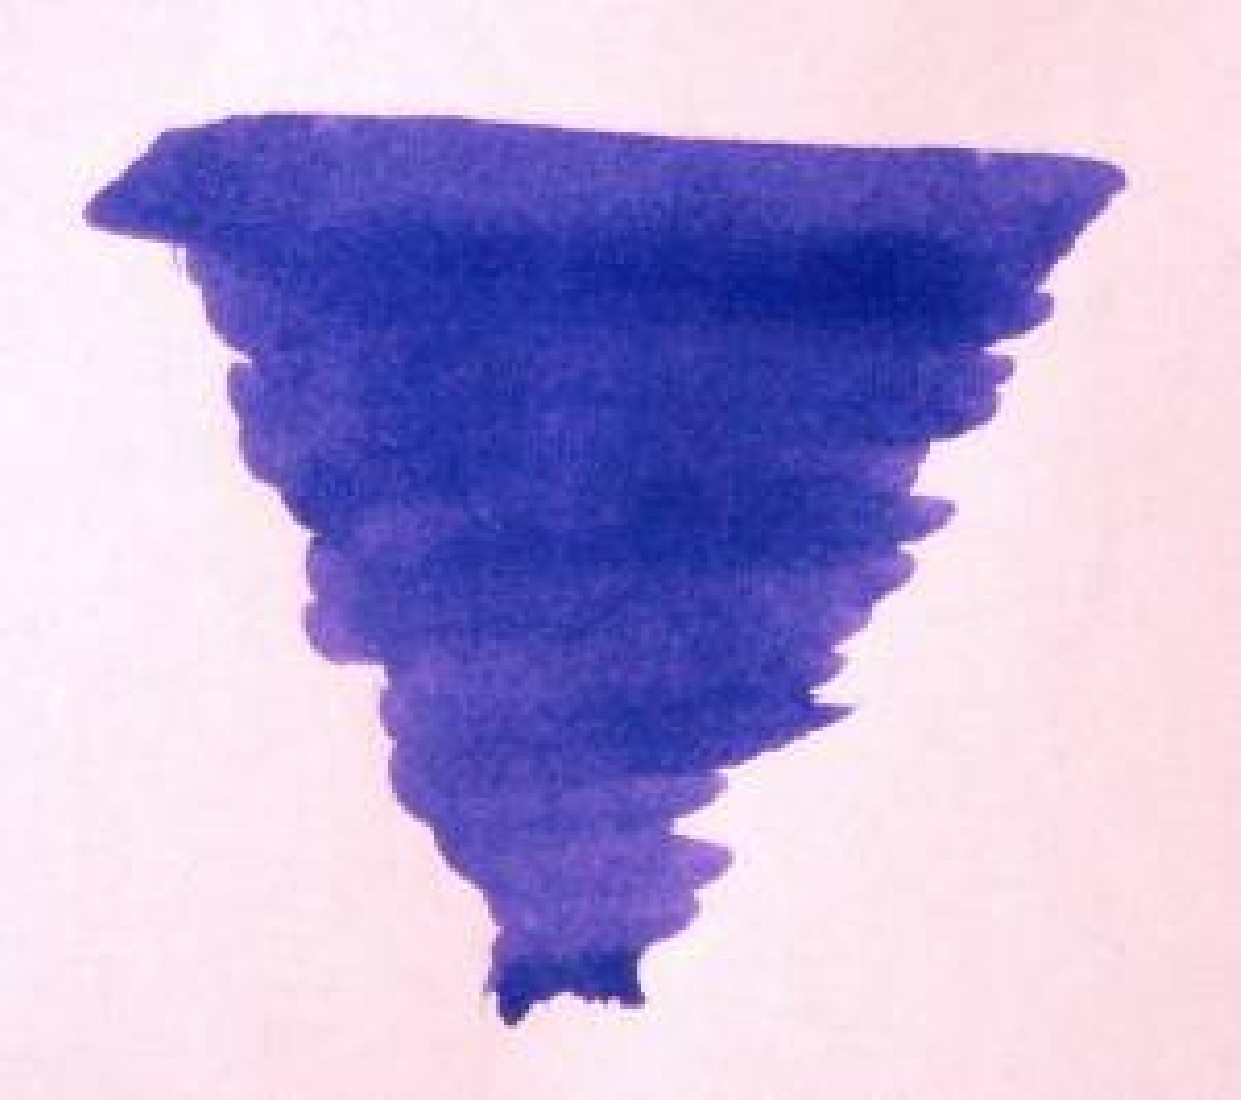 Diamine 30ml Imperial Blue 251 Fountain pen ink